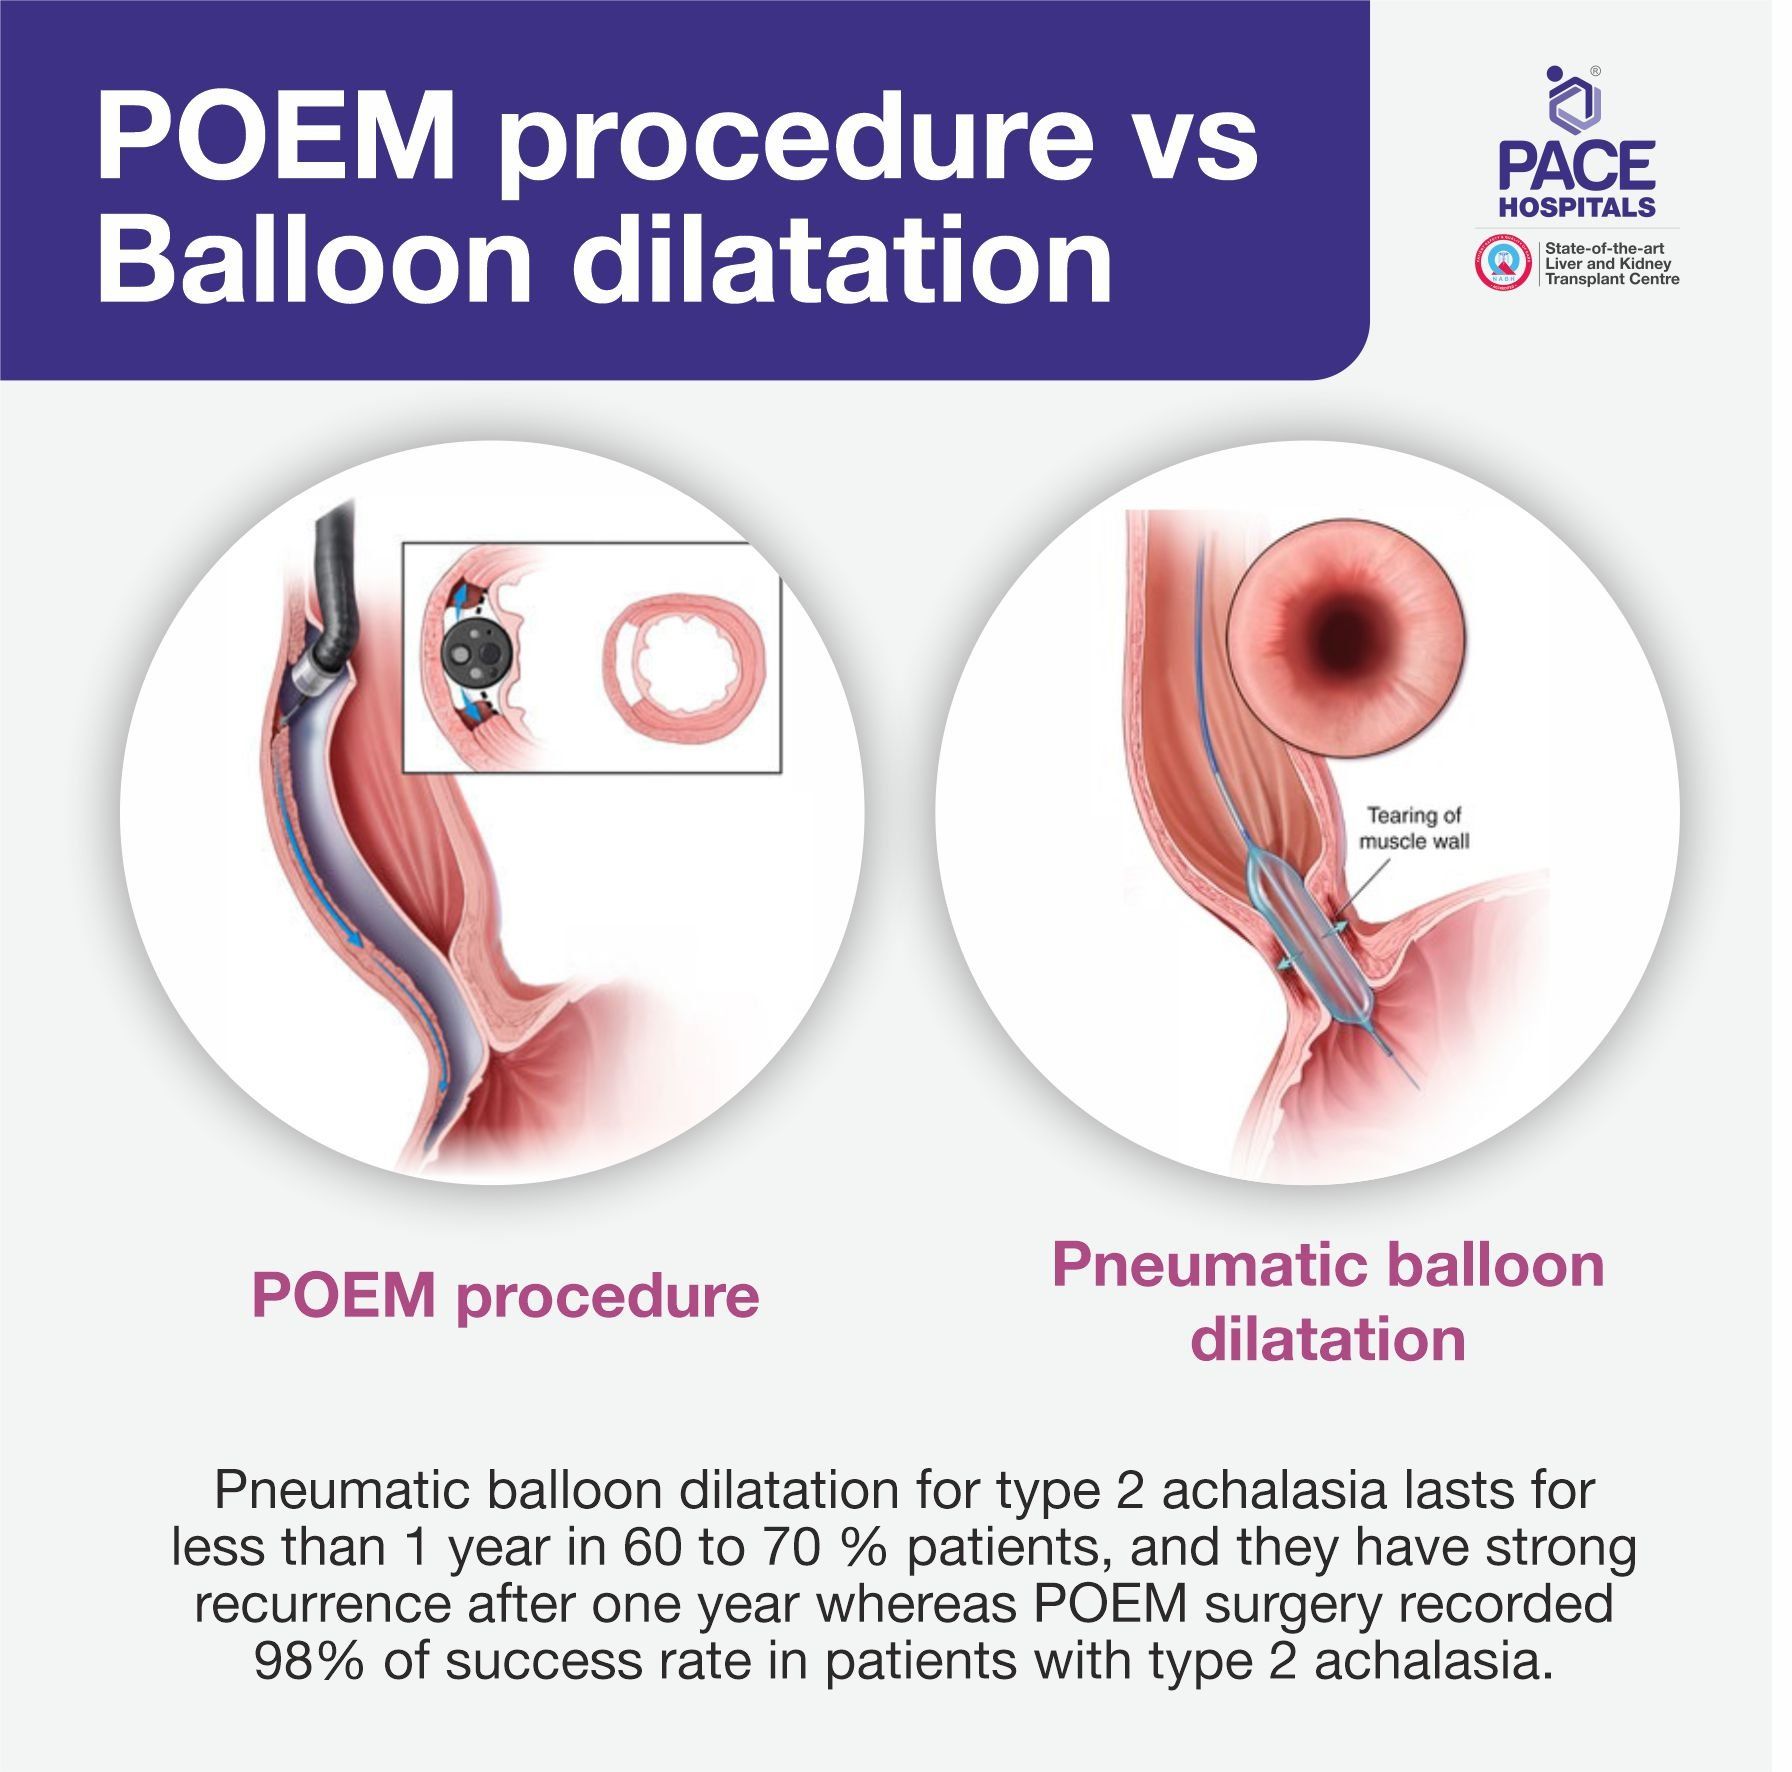 POEM vs balloon dilatation for type 2 achalasia